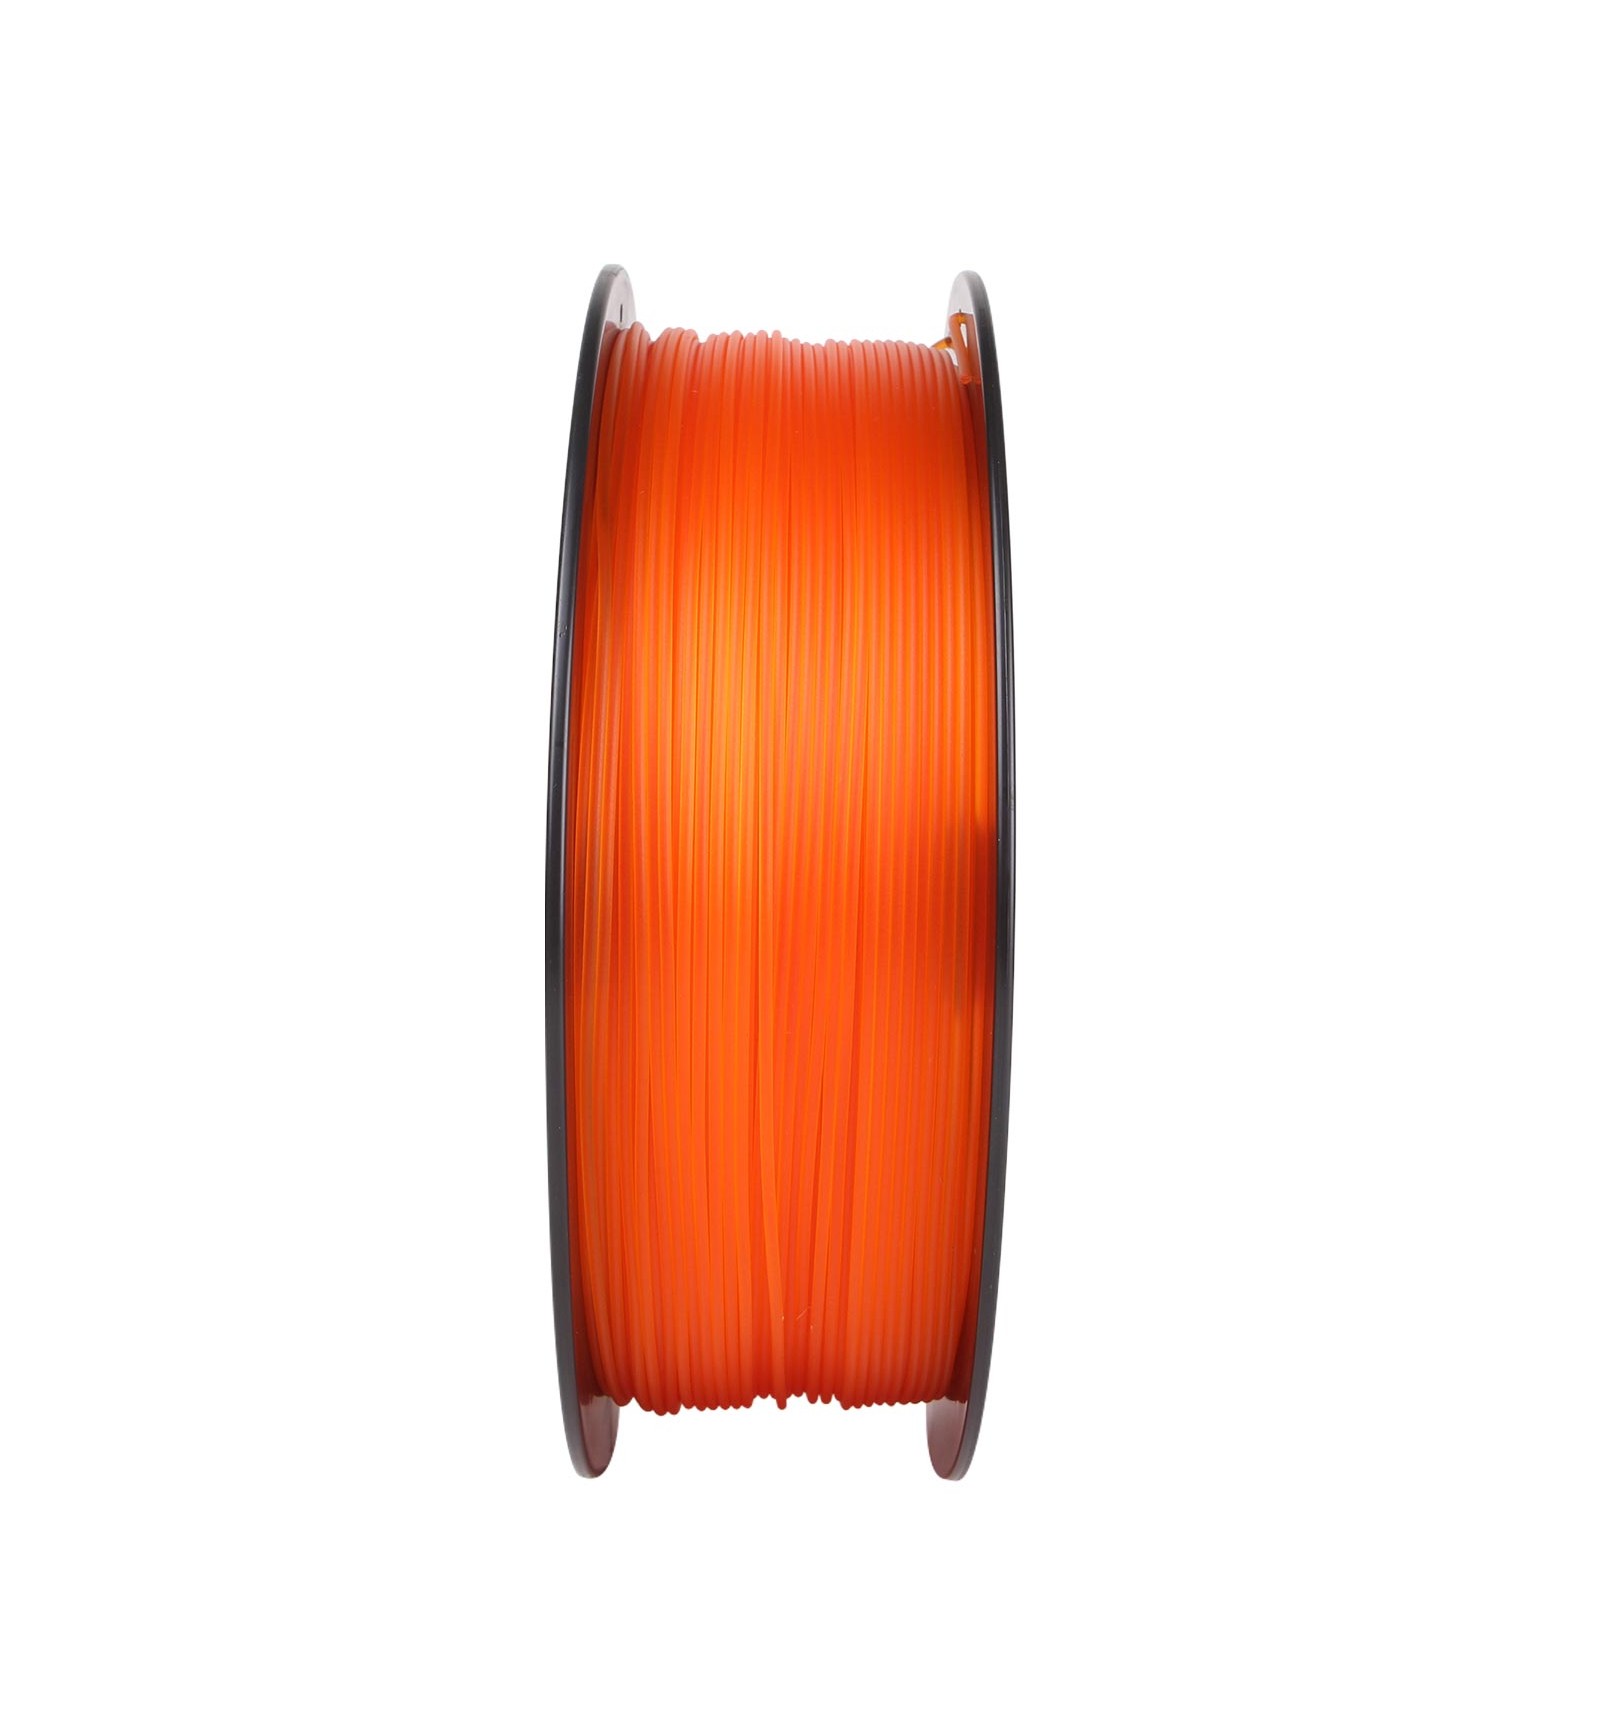 SunLu PLA Filament  1.75mm Transparent Orange 1kg – DIY Electronics